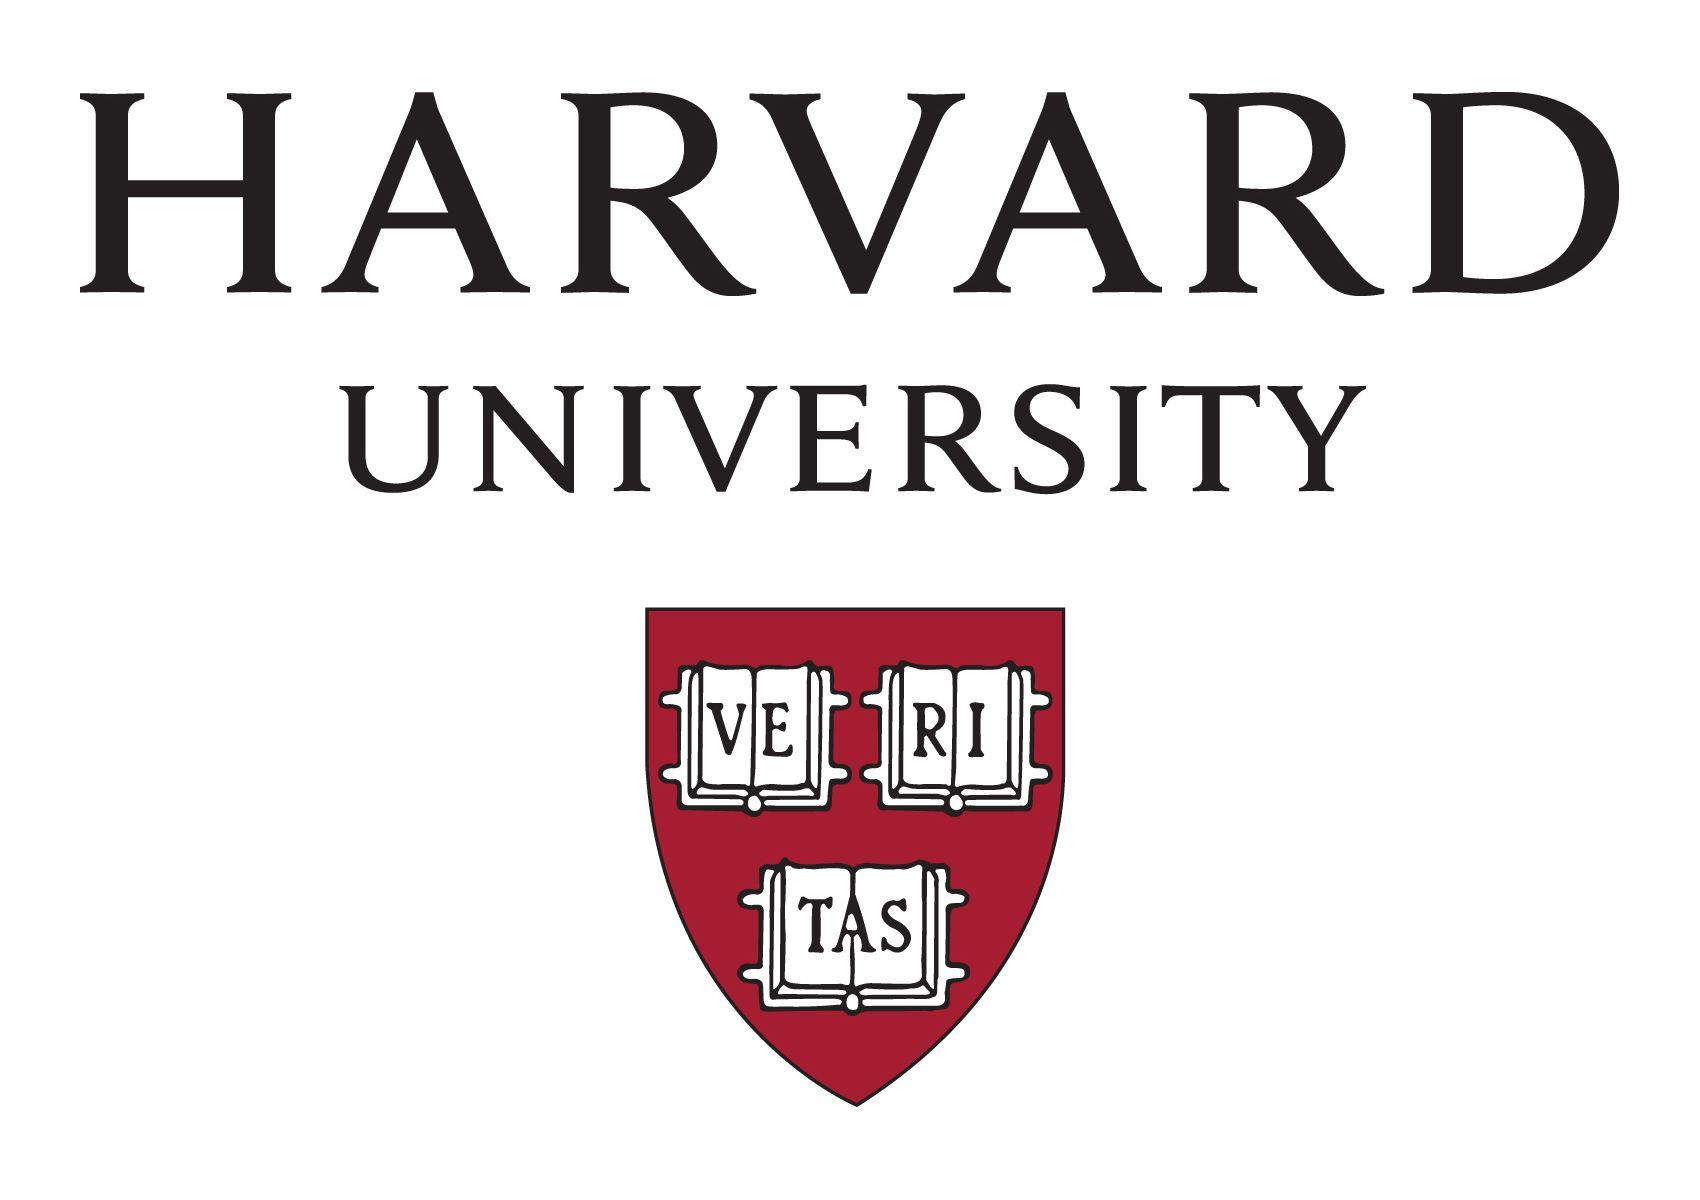 Harvard Basketball Logo - Harvard Logo, Harvard Symbol Meaning, History and Evolution